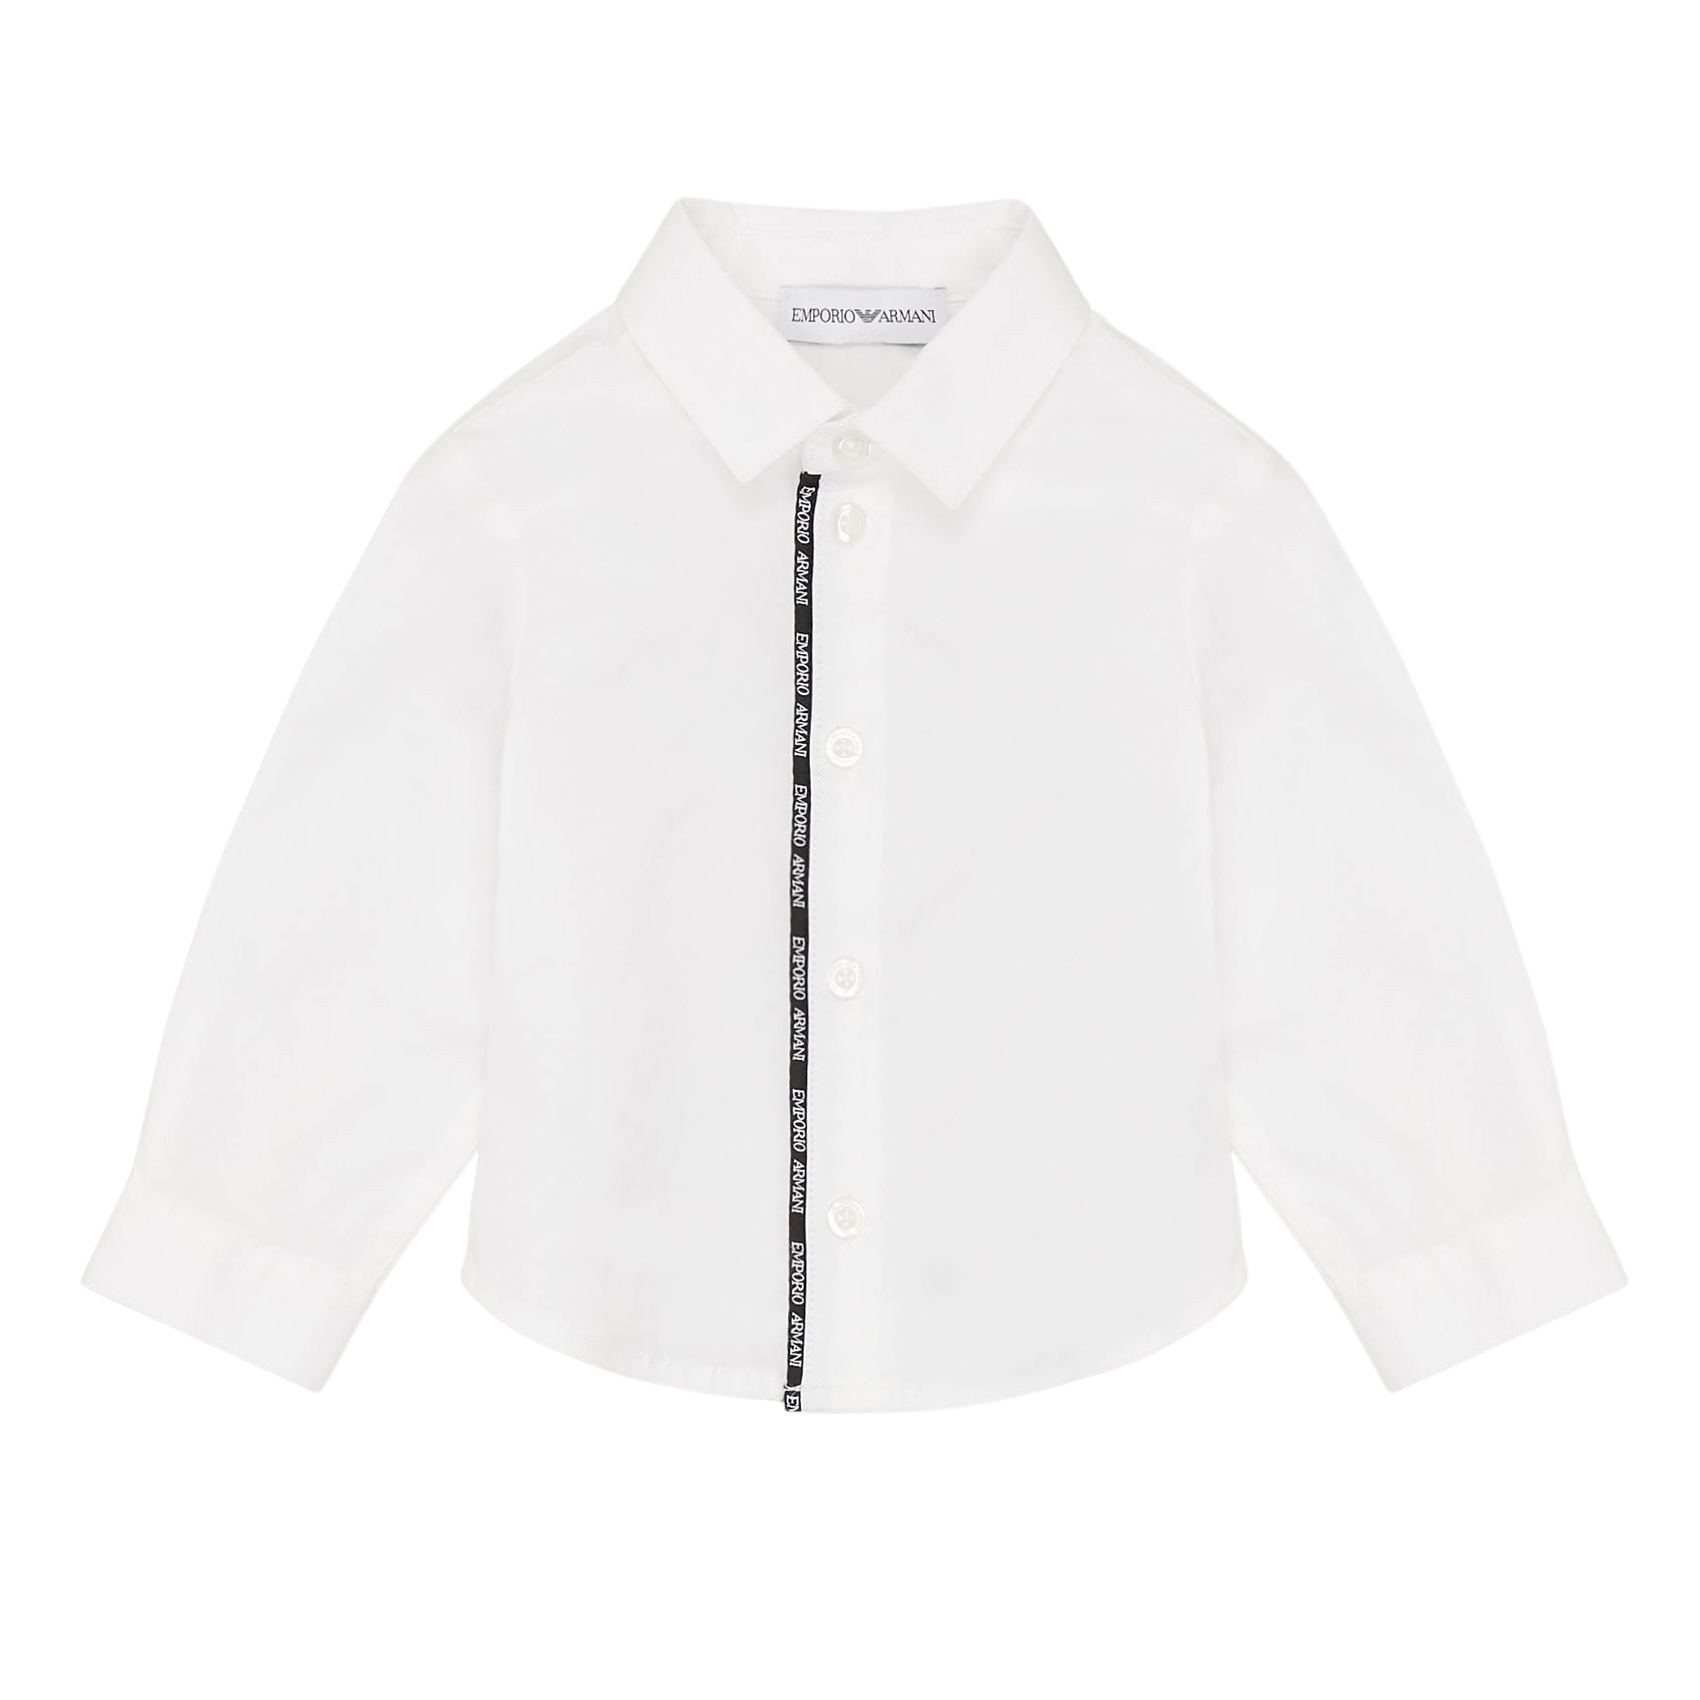 ingewikkeld interview vice versa Emporio Armani wit blouse met logo - Lolly Pop Kindermode